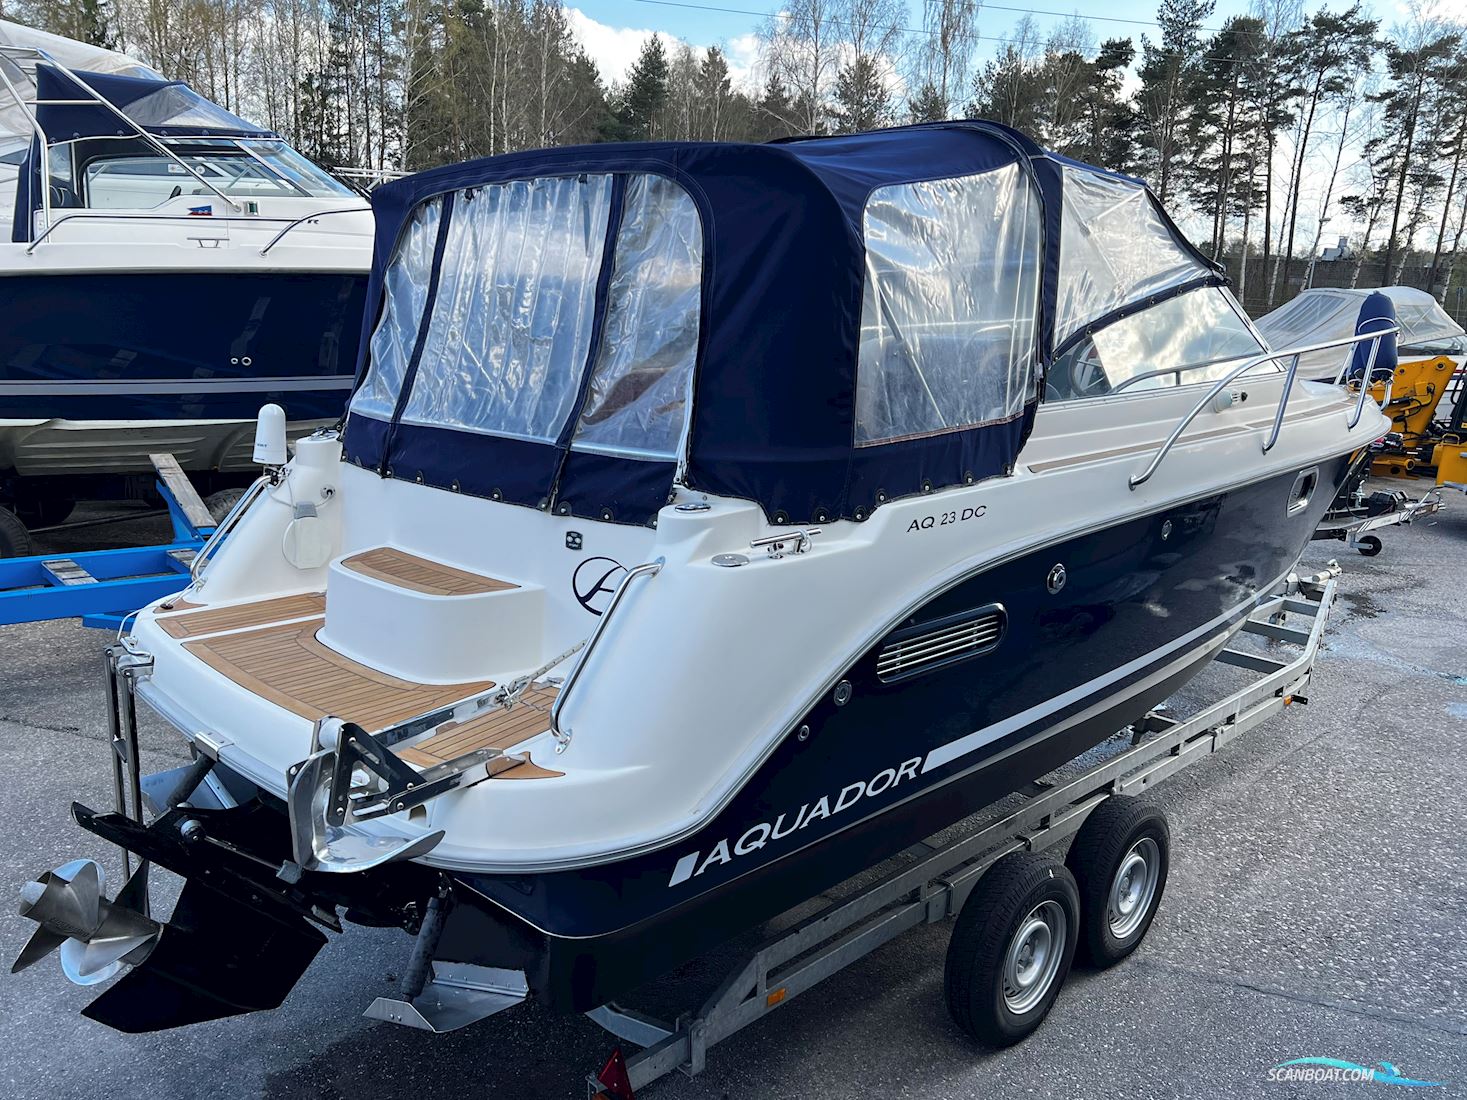 Aquador 23 DC Motor boat 2010, with Mercruiser 4.3 V6 Mpi engine, Sweden